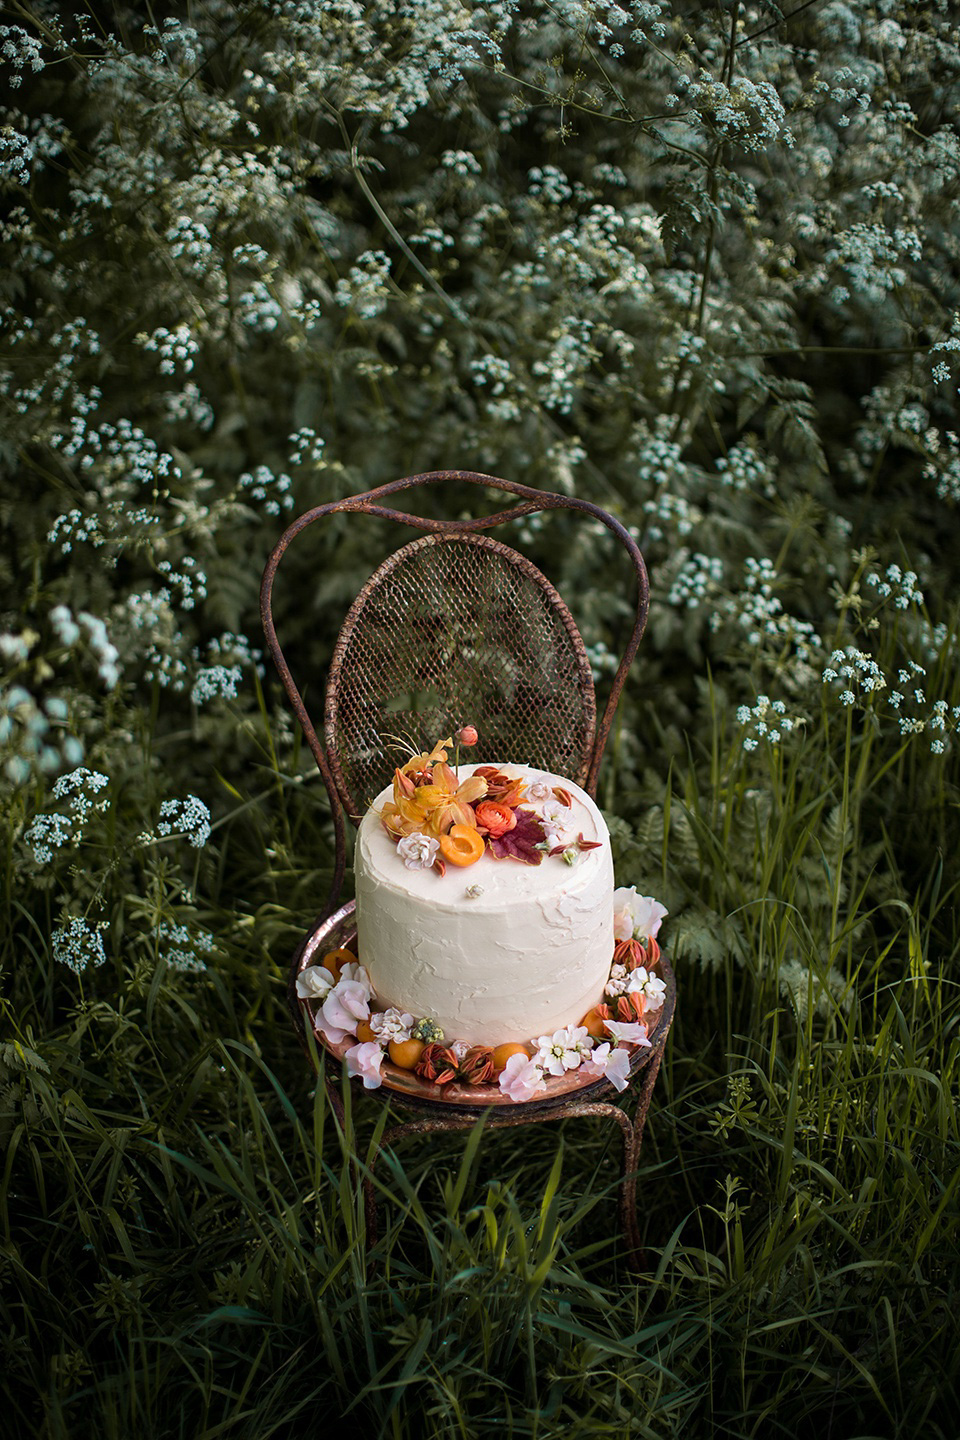 Fine art wedding inspiration - English garden romance. Photography by Rebecca Goddard, floral styling by Jo Flowers.